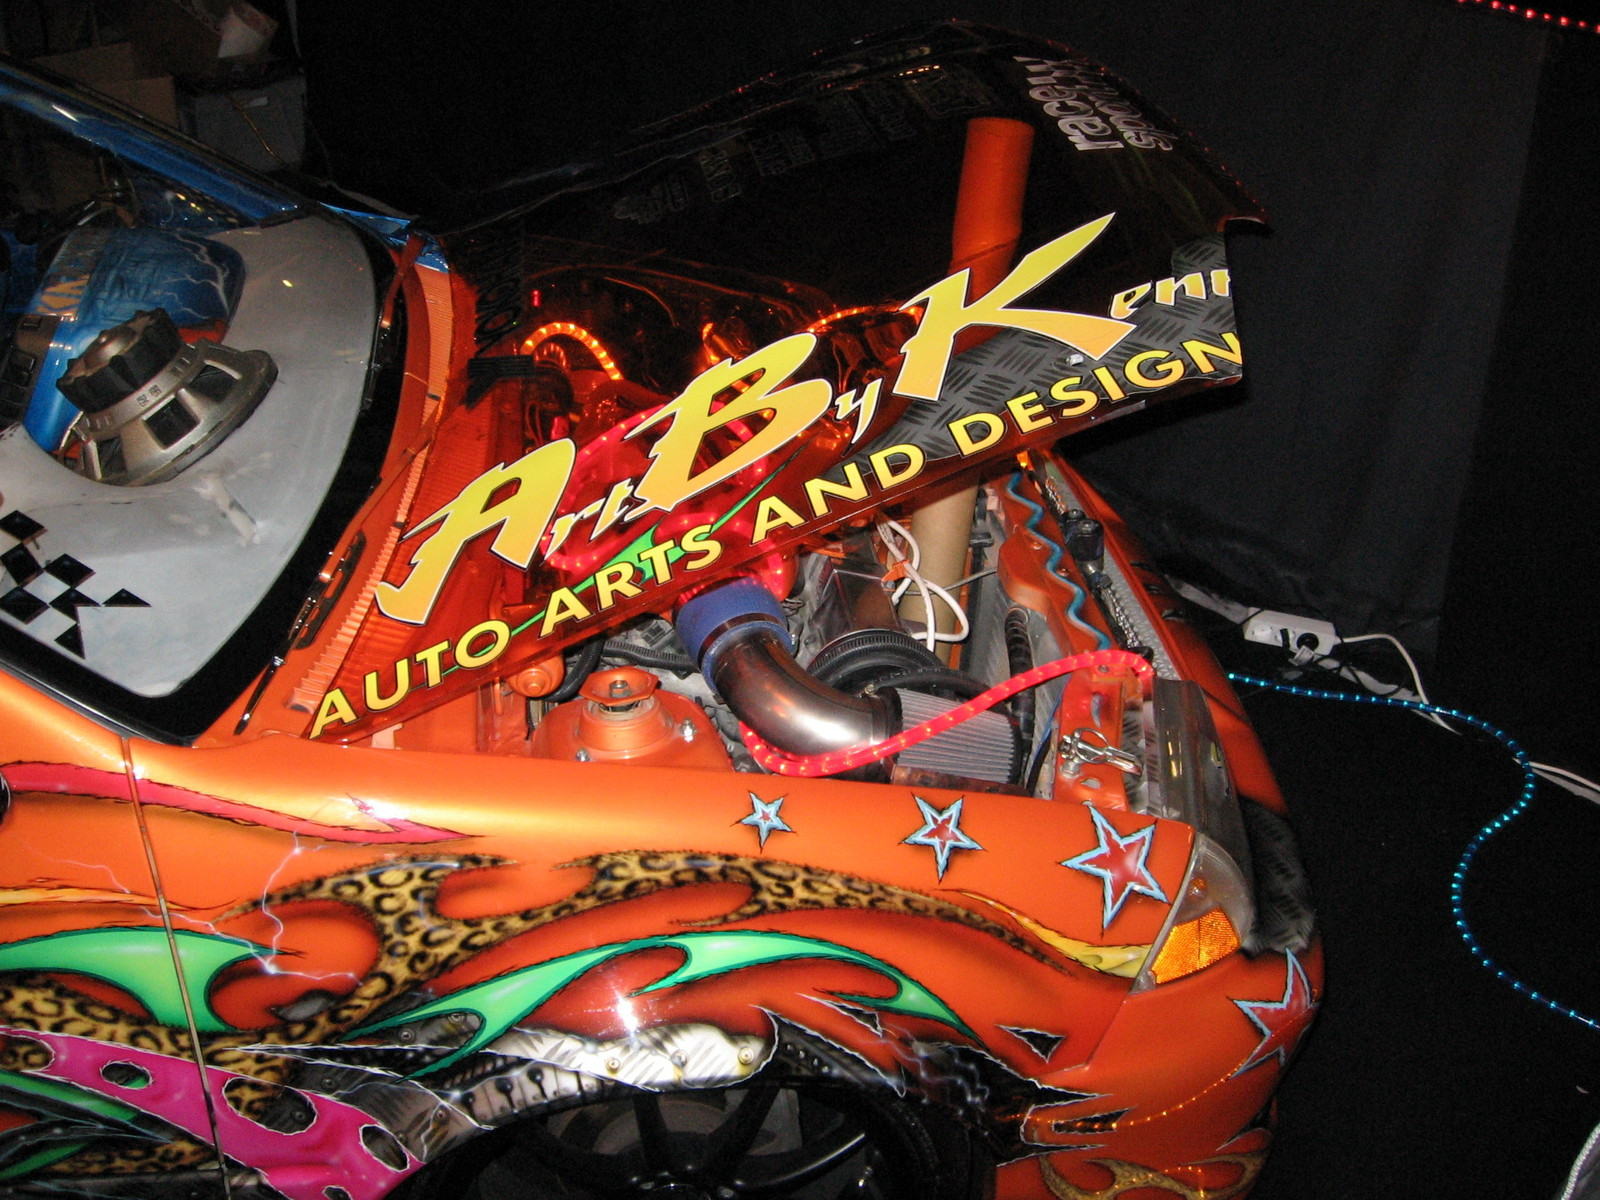 X-treme Car Show 9.10.2005, ABK Auto Arts and Design